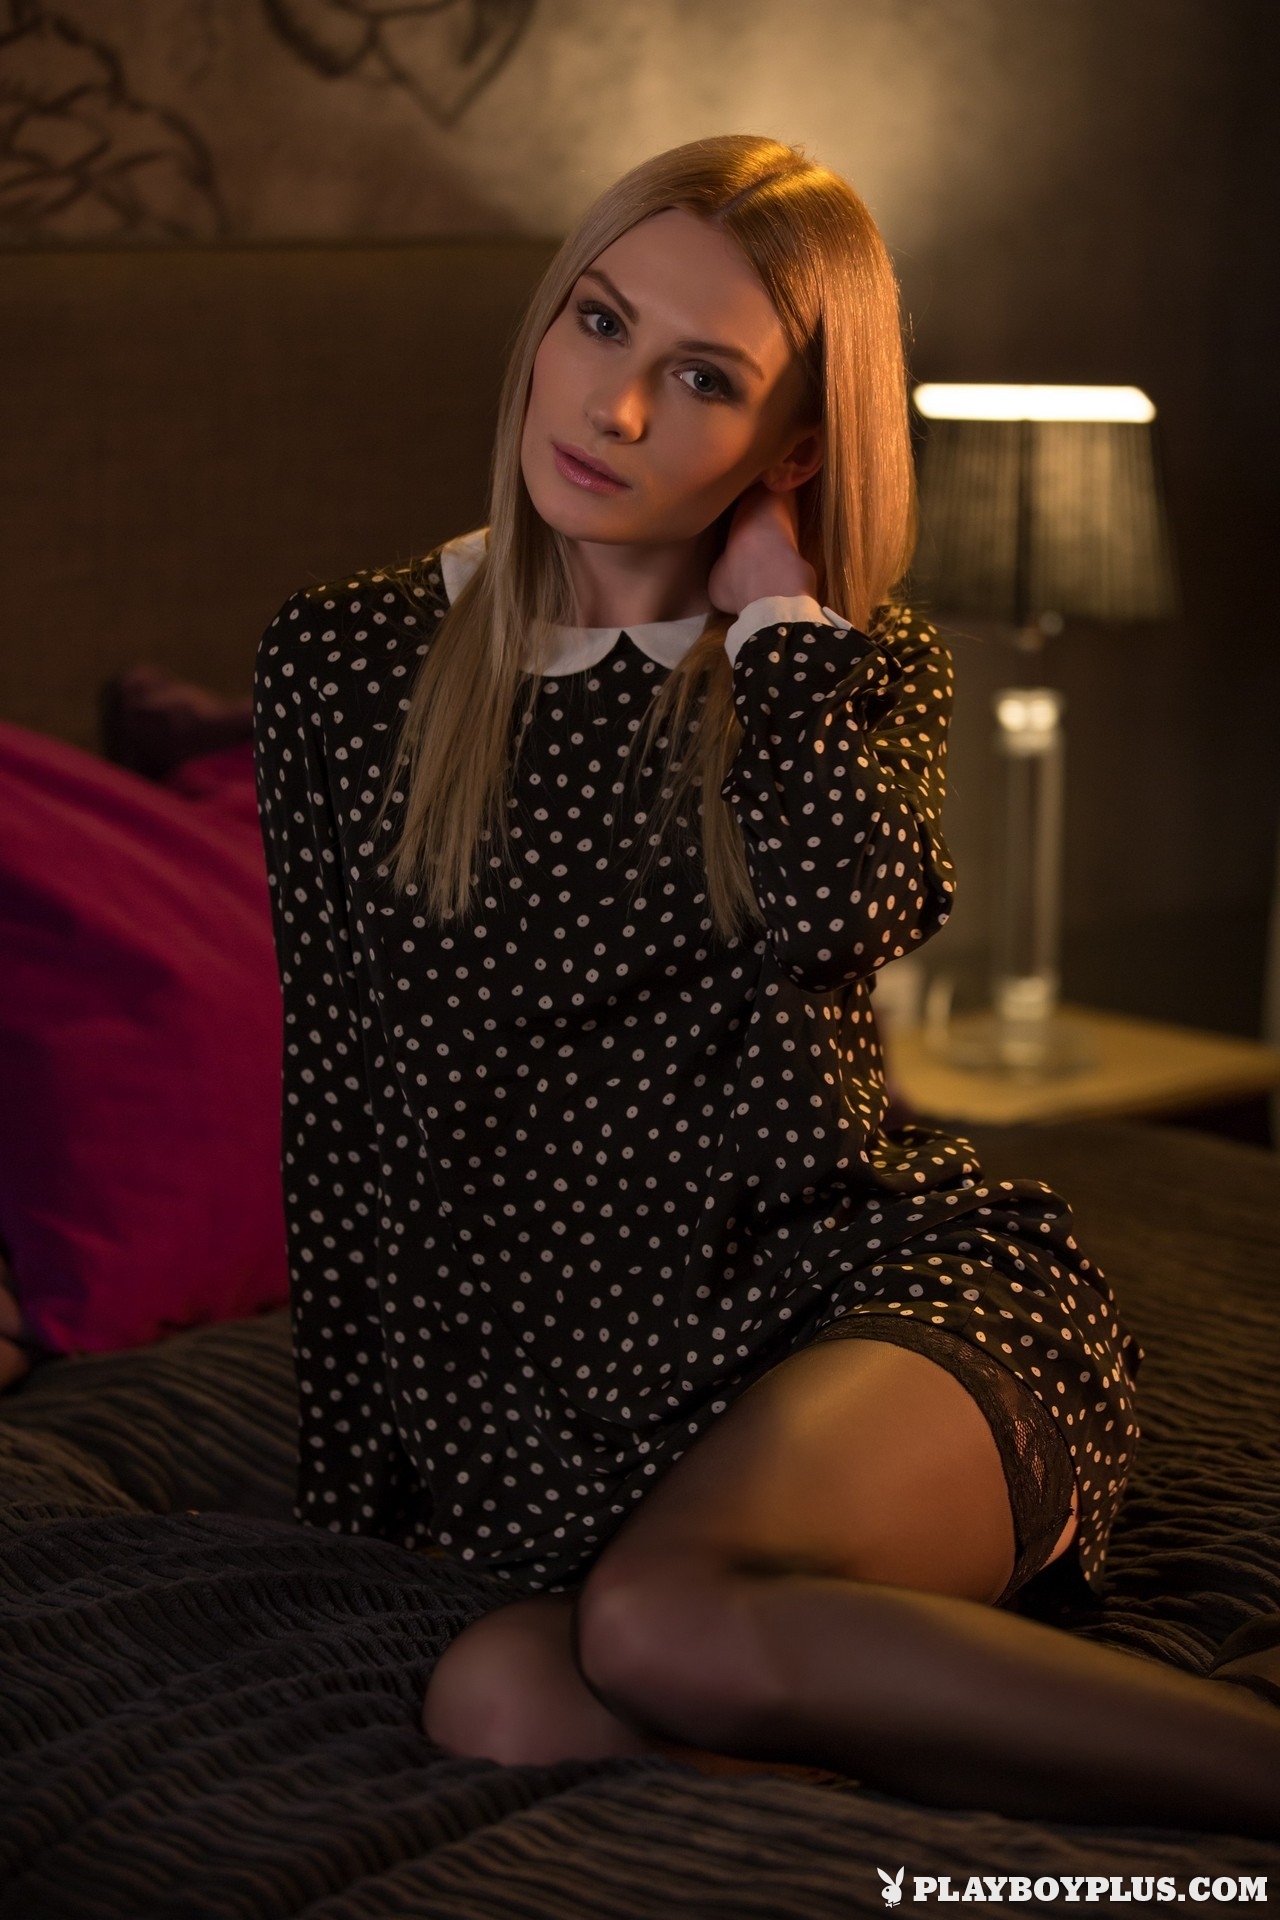 celia-bedroom-temptress-skinny-blonde-boobs-naked-playboy-02